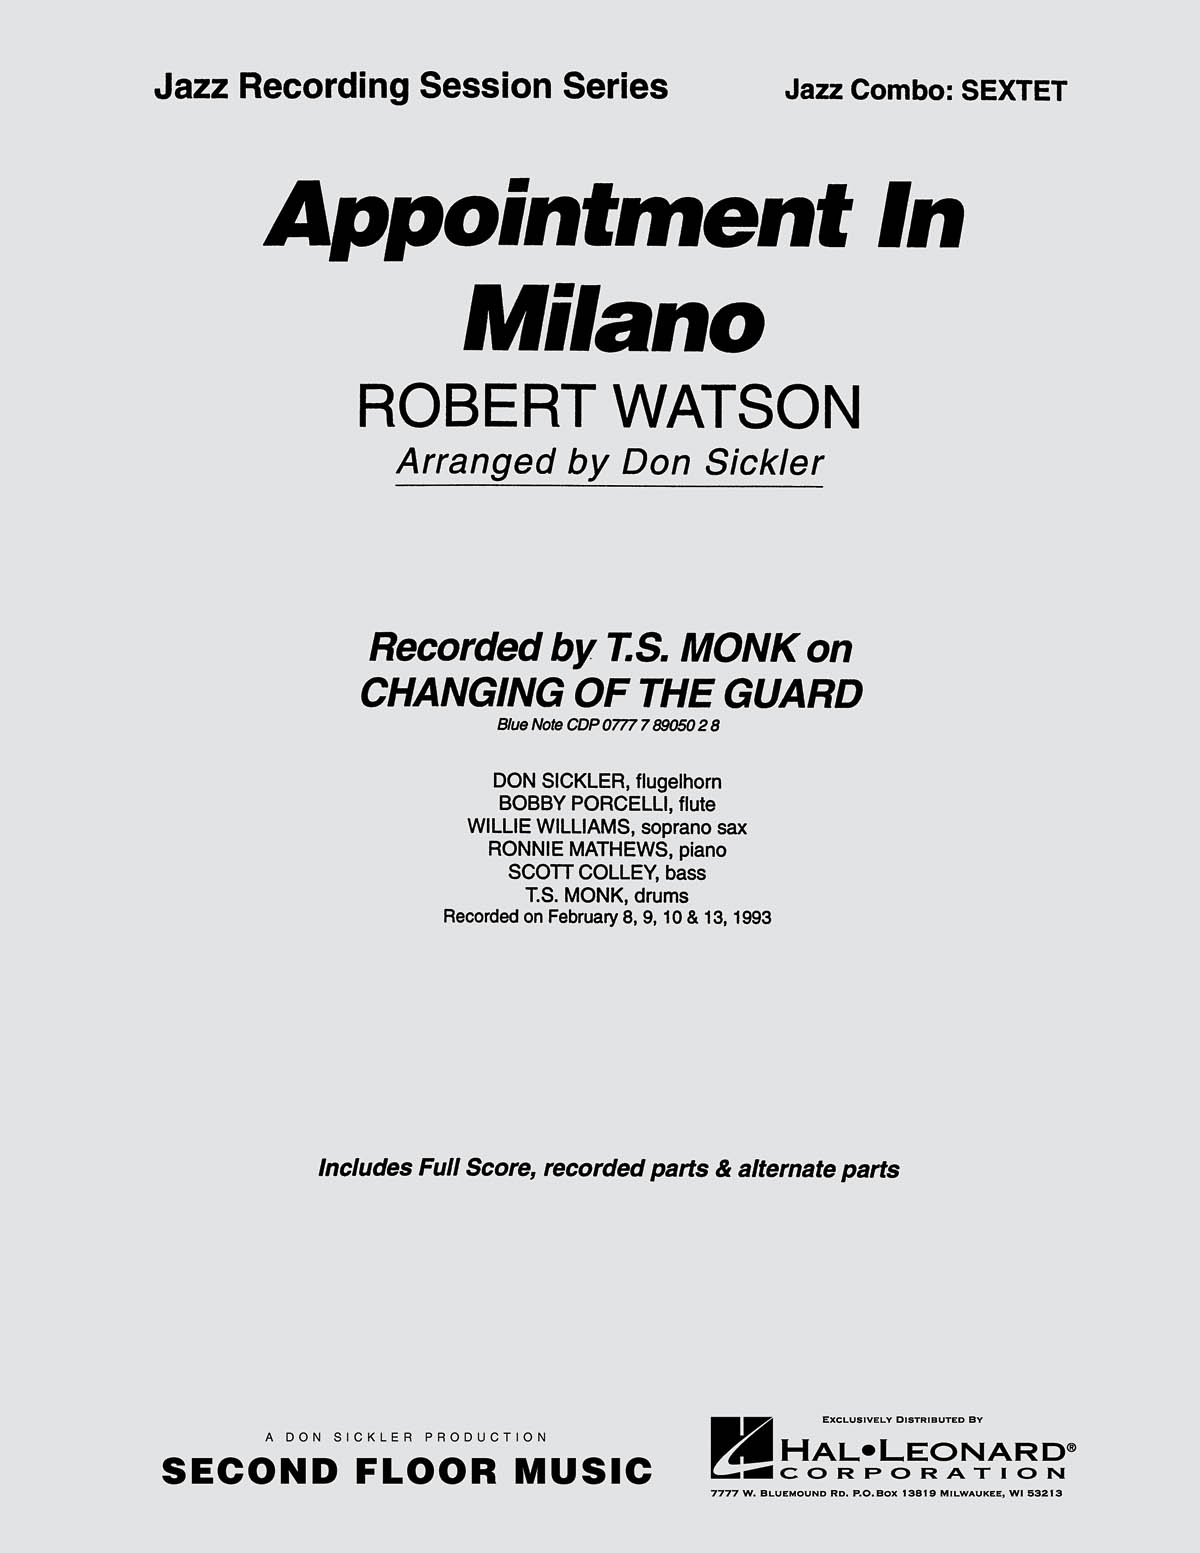 Robert Watson: Appointment in Milano Sextet: Horn Ensemble: Score